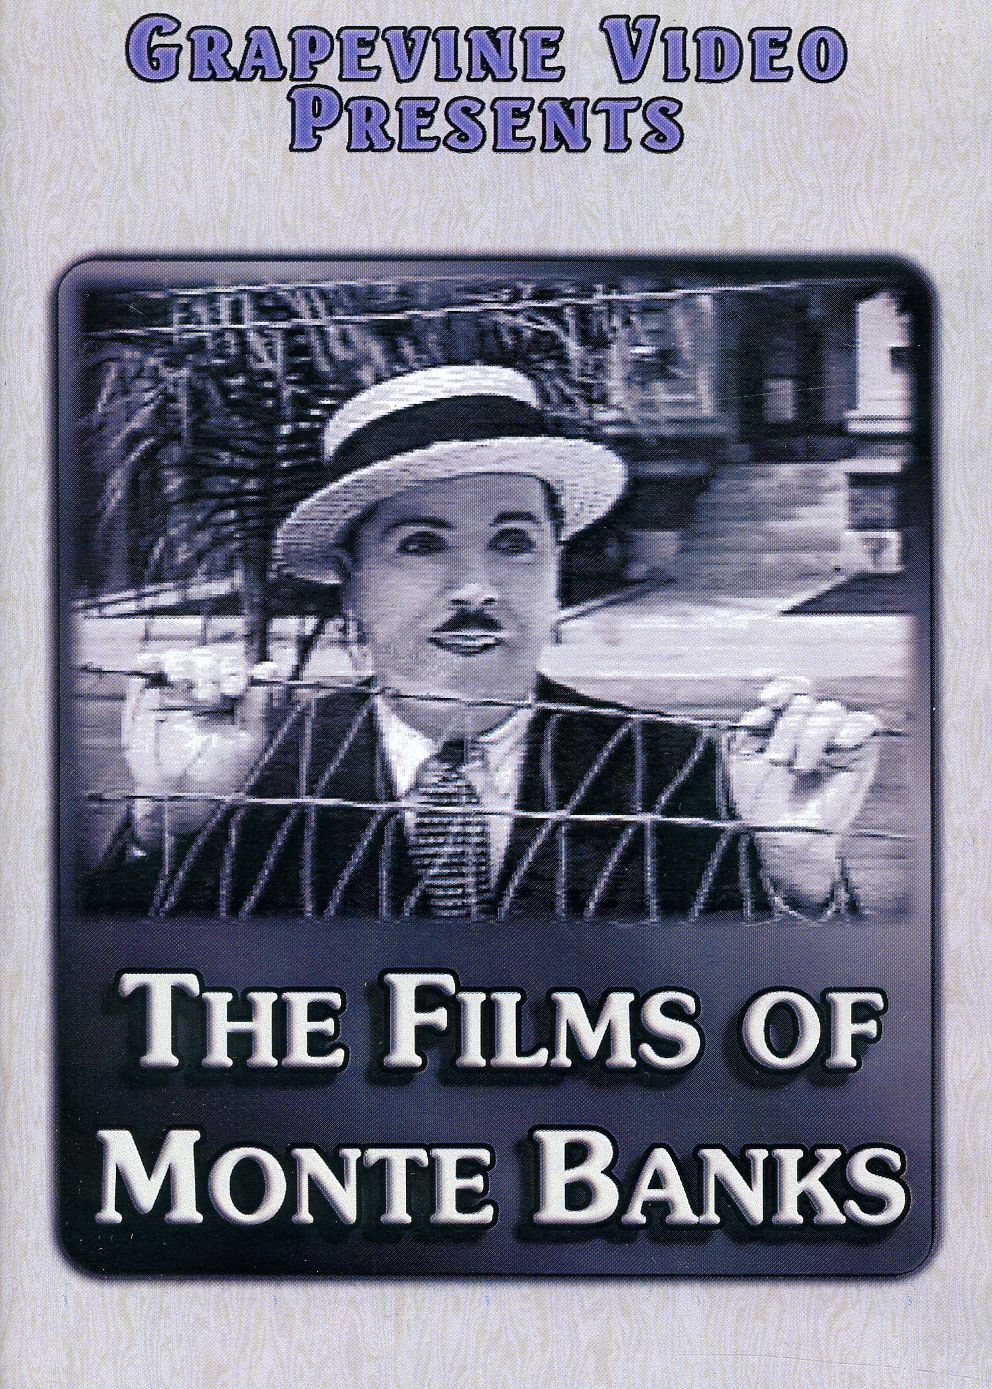 MONTE BANKS COMEDIES